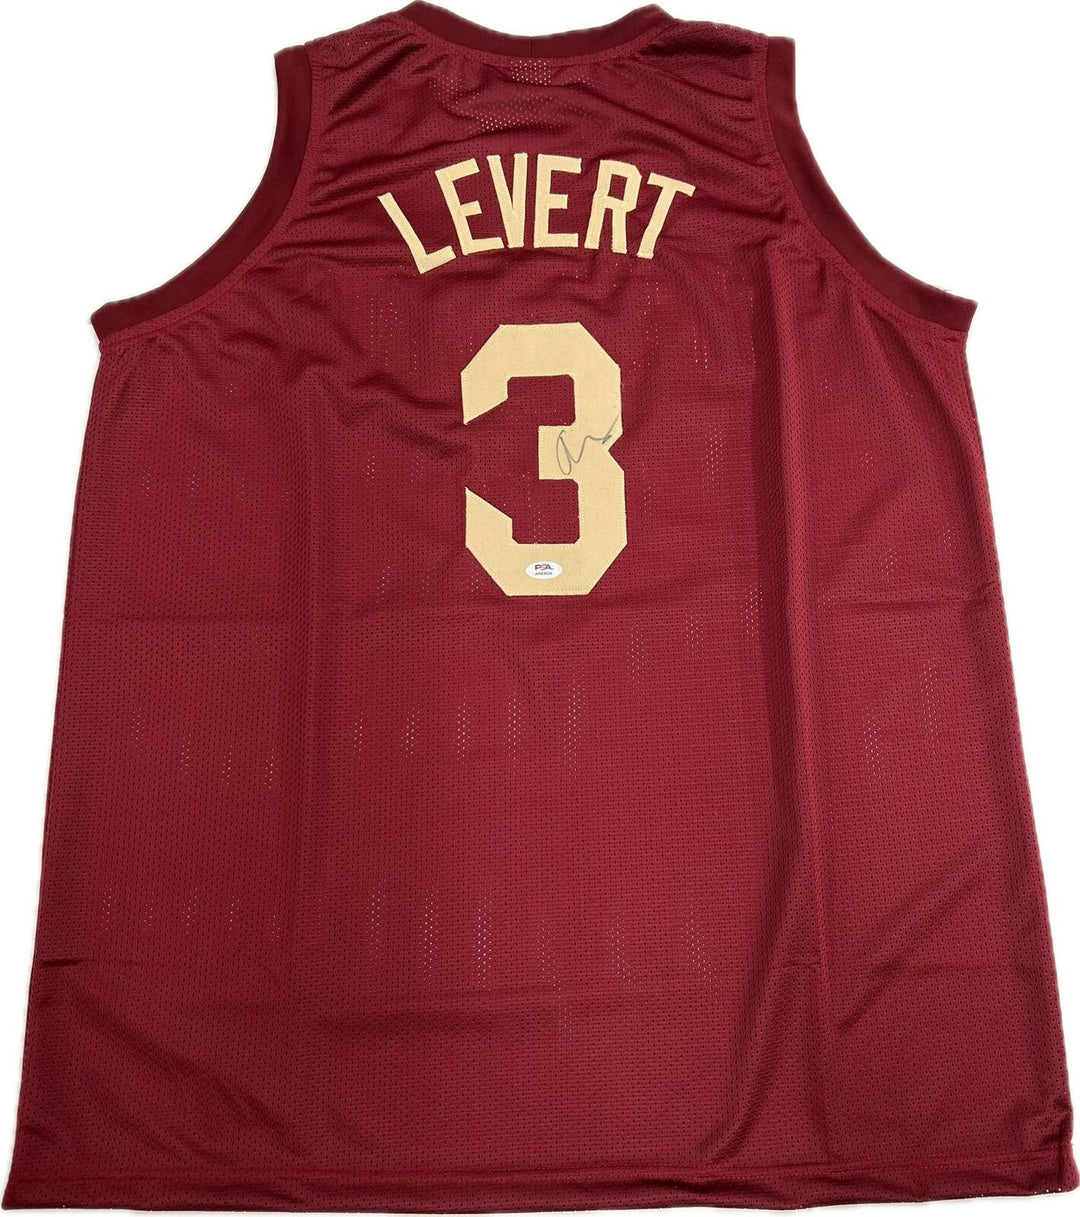 Caris LeVert signed jersey PSA/DNA Cleveland Cavaliers Autographed Image 1